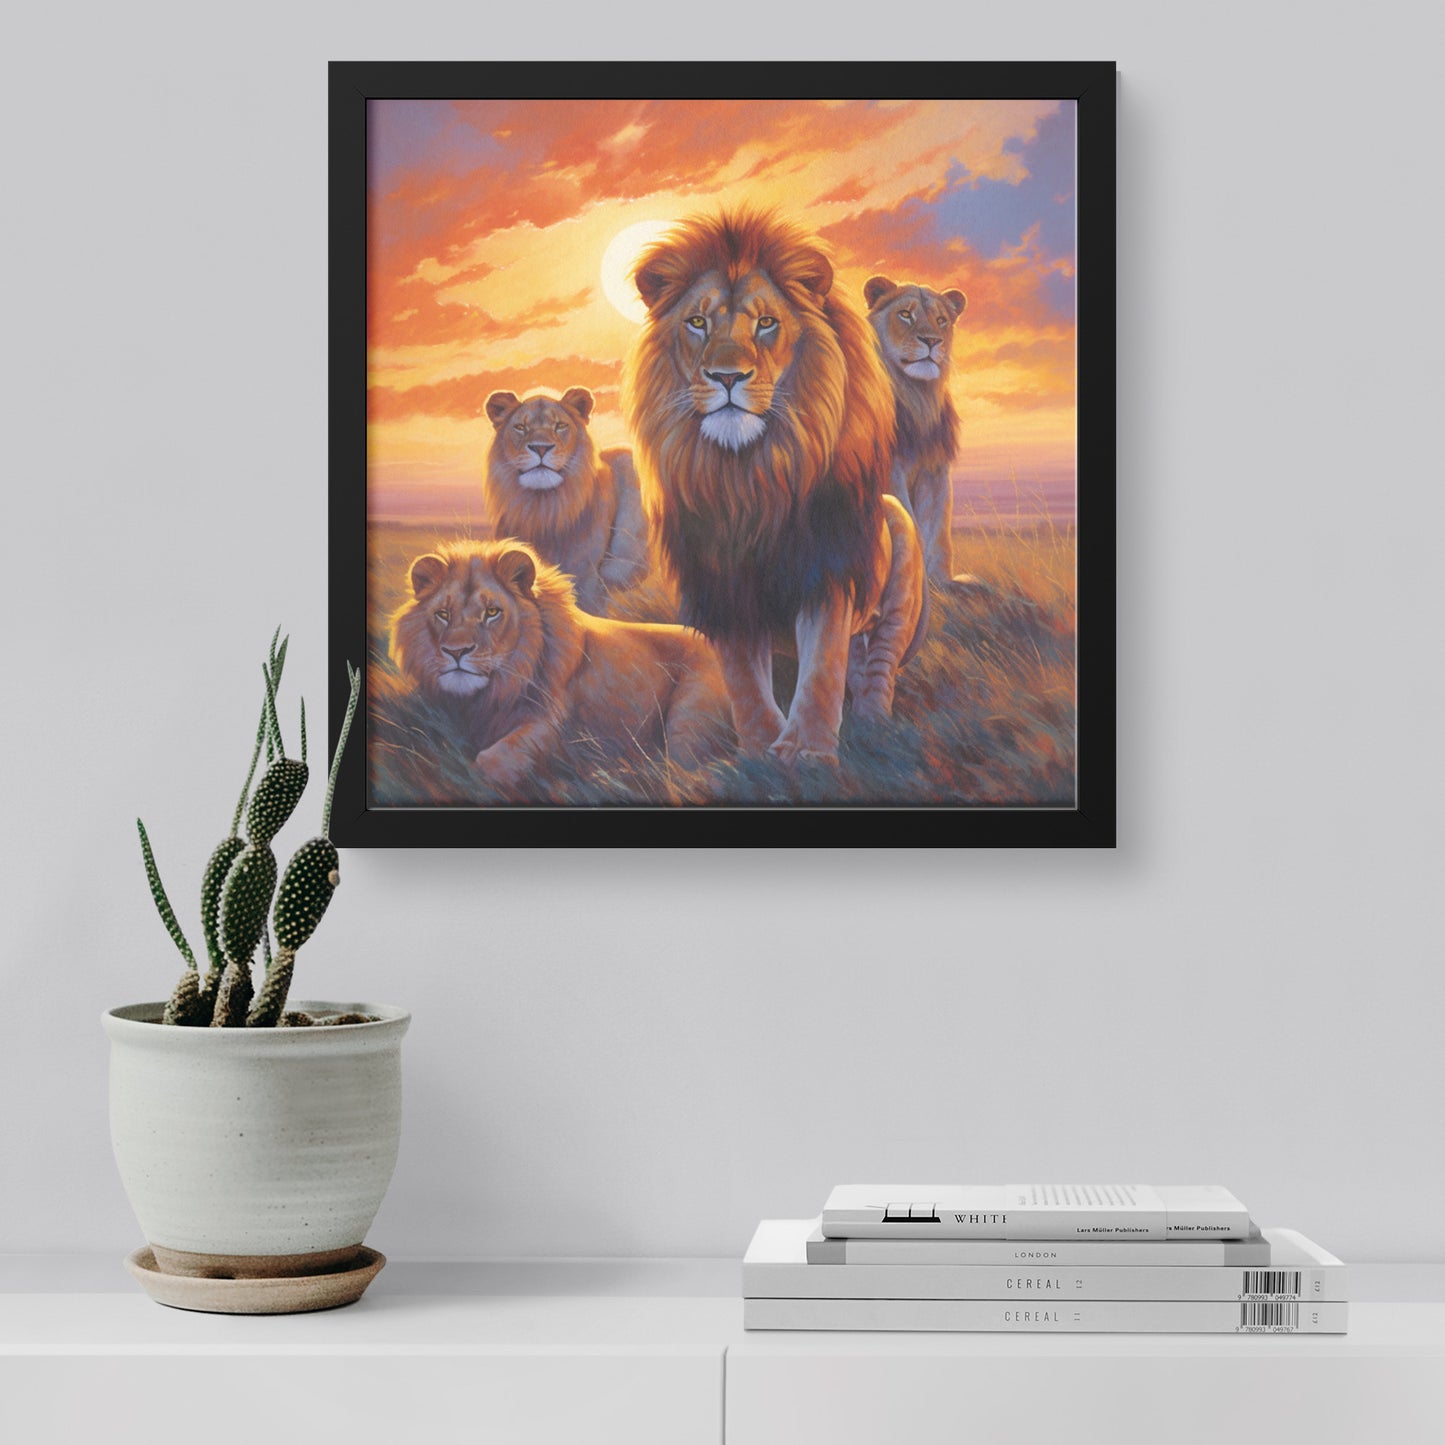 Savannah Sunrise: The Lion Pride's New Day